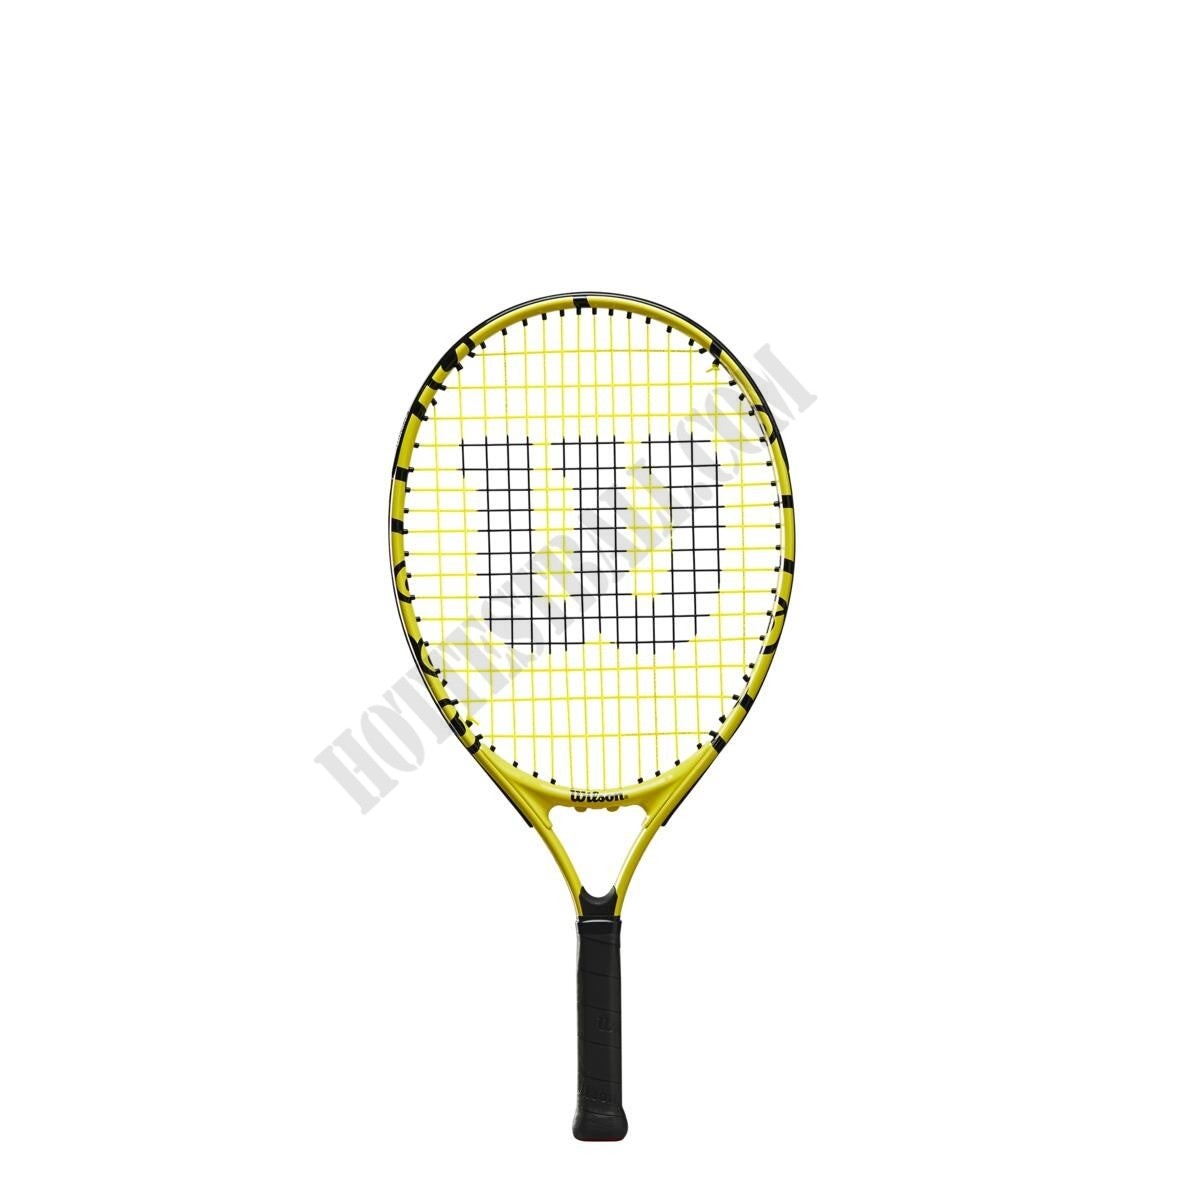 Minions 21 Tennis Racket - Wilson Discount Store - Minions 21 Tennis Racket - Wilson Discount Store